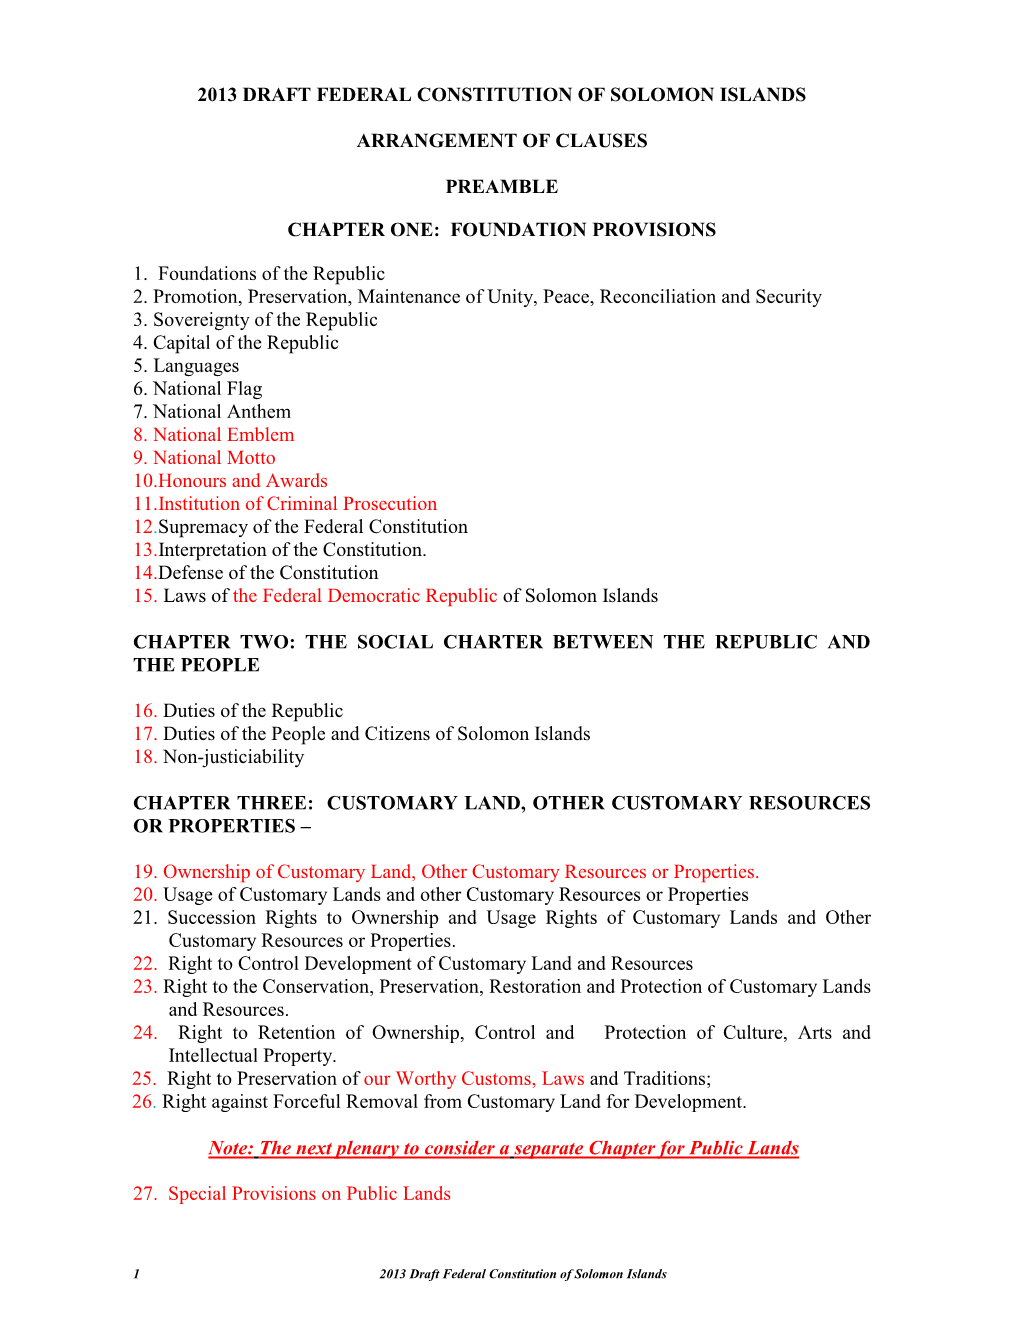 2013 Draft Federal Constitution of Solomon Islands